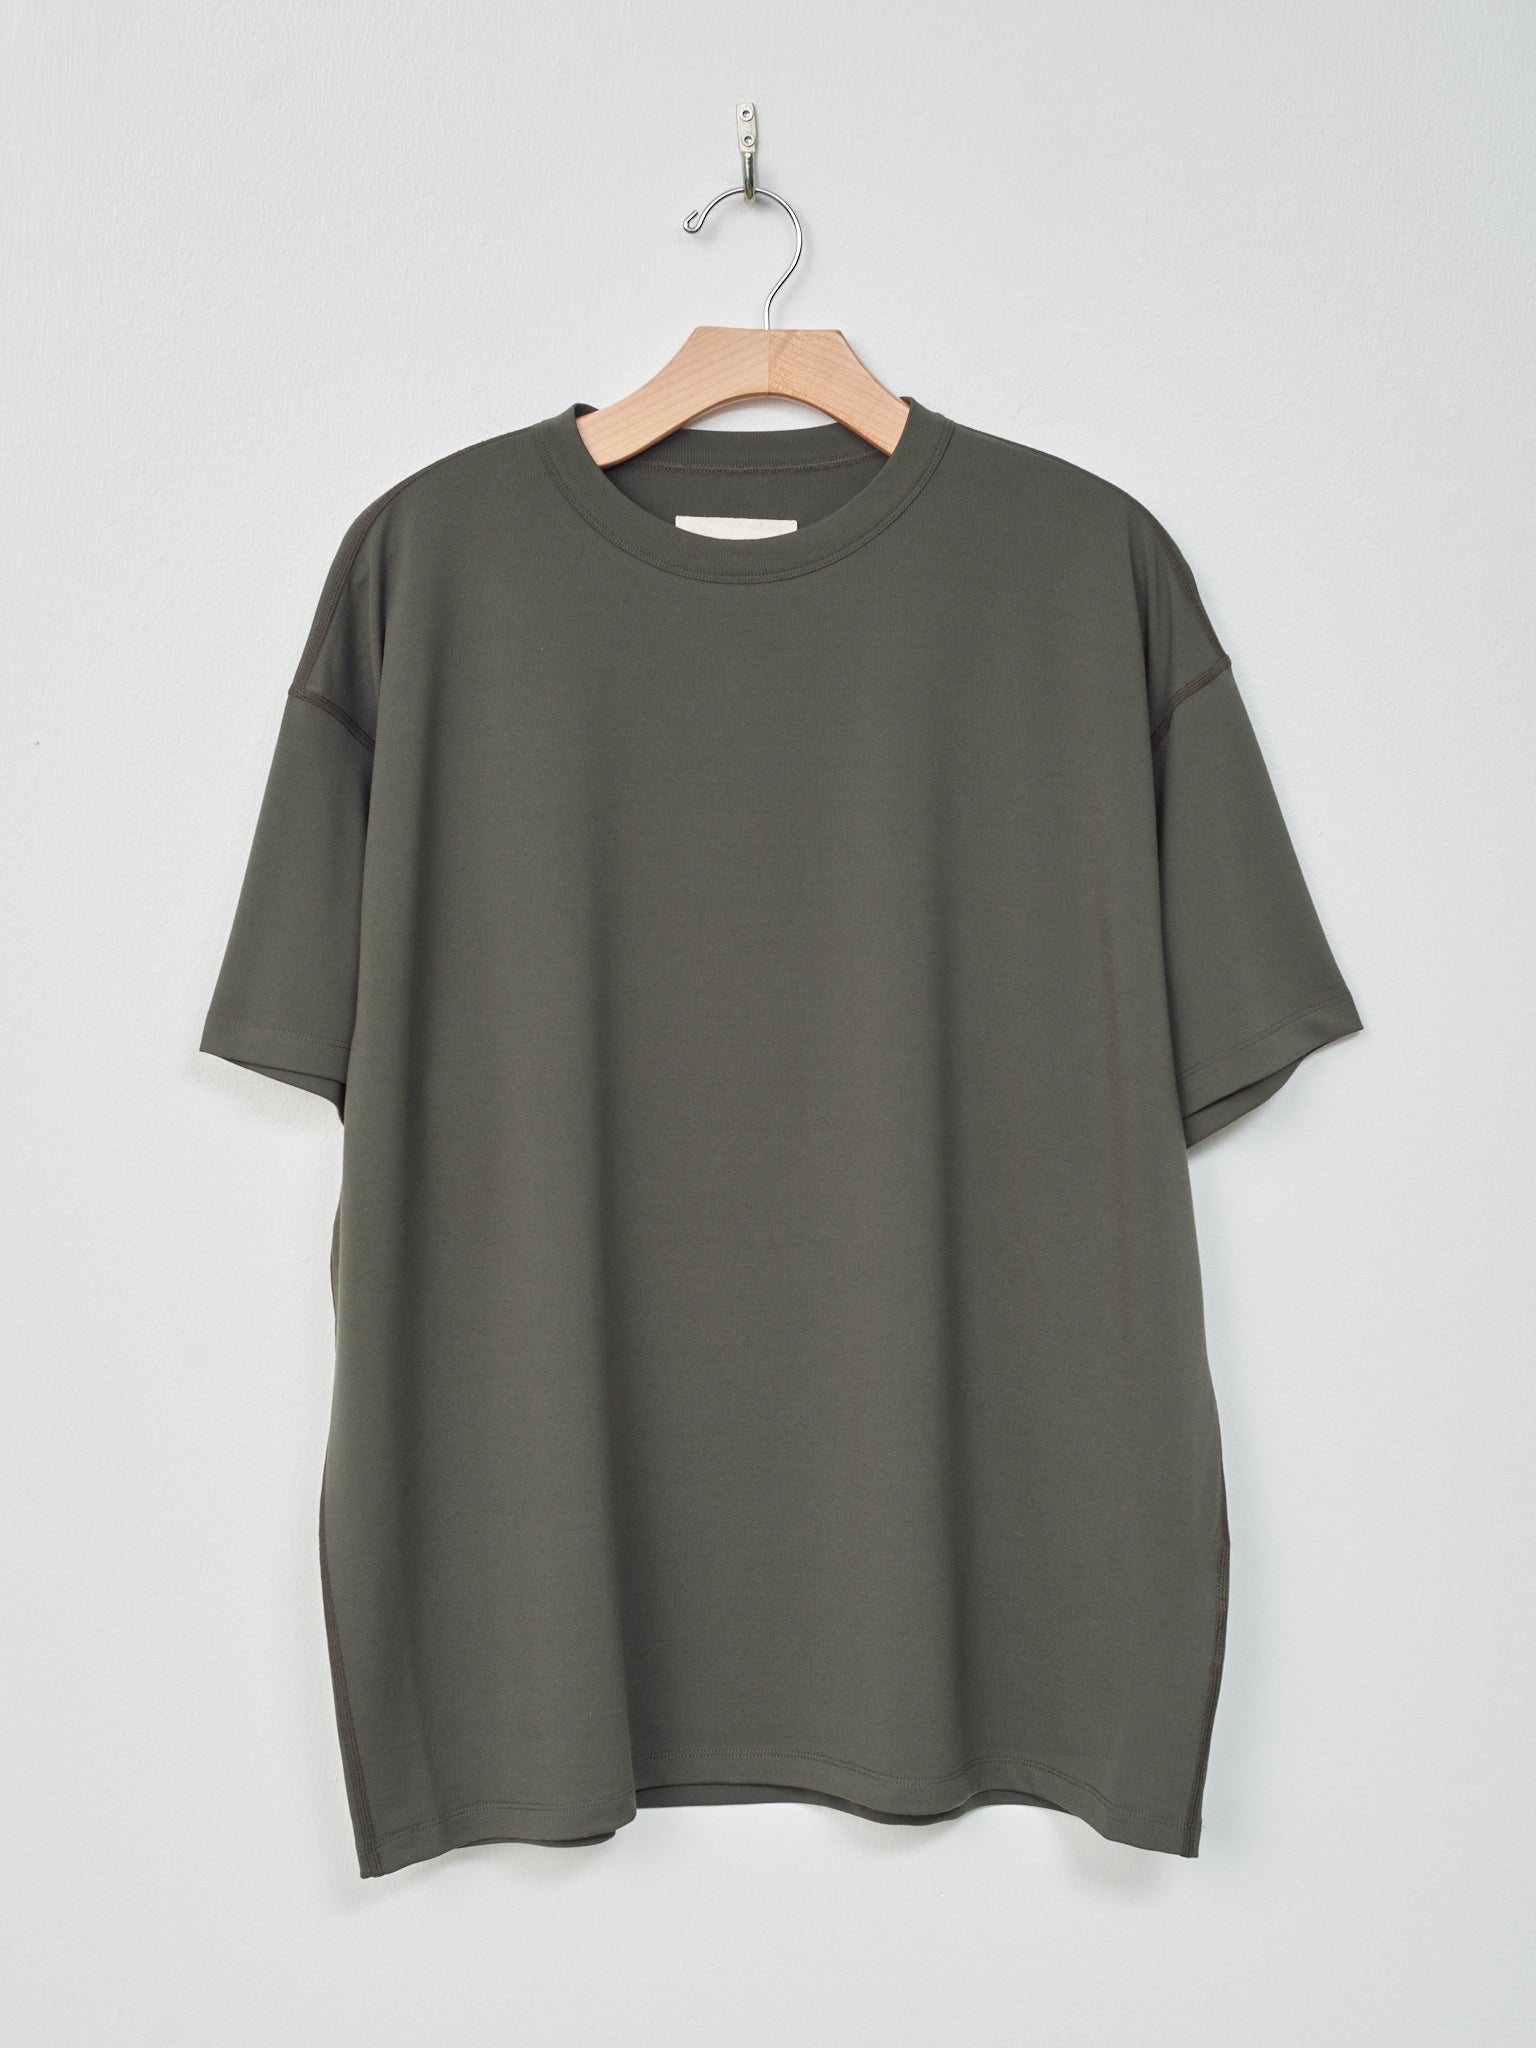 Namu Shop - Yoko Sakamoto Standard T-Shirt - Olive